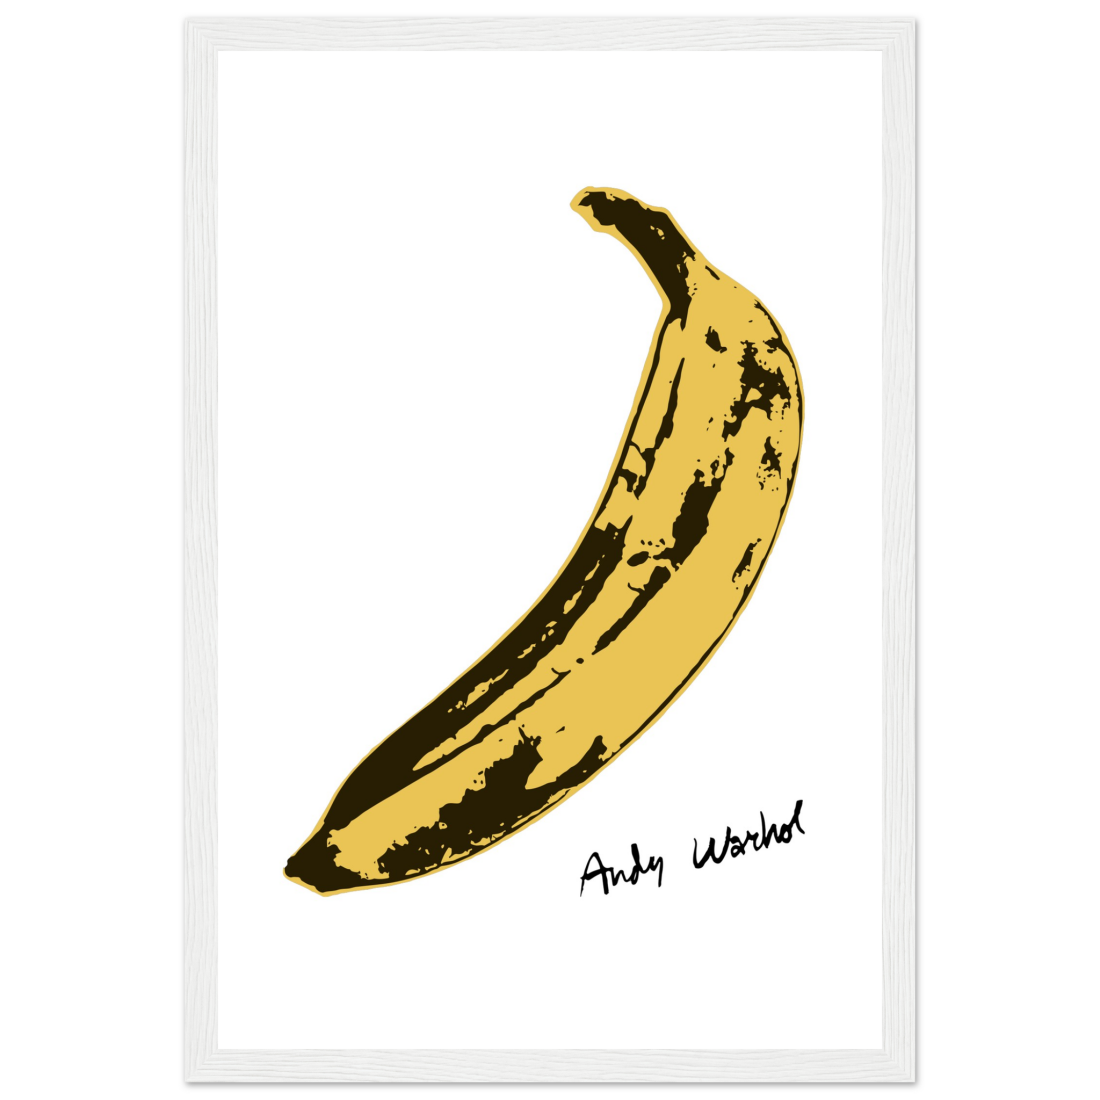 Andy Warhol's Banana, 1967 Pop Art Poster-14